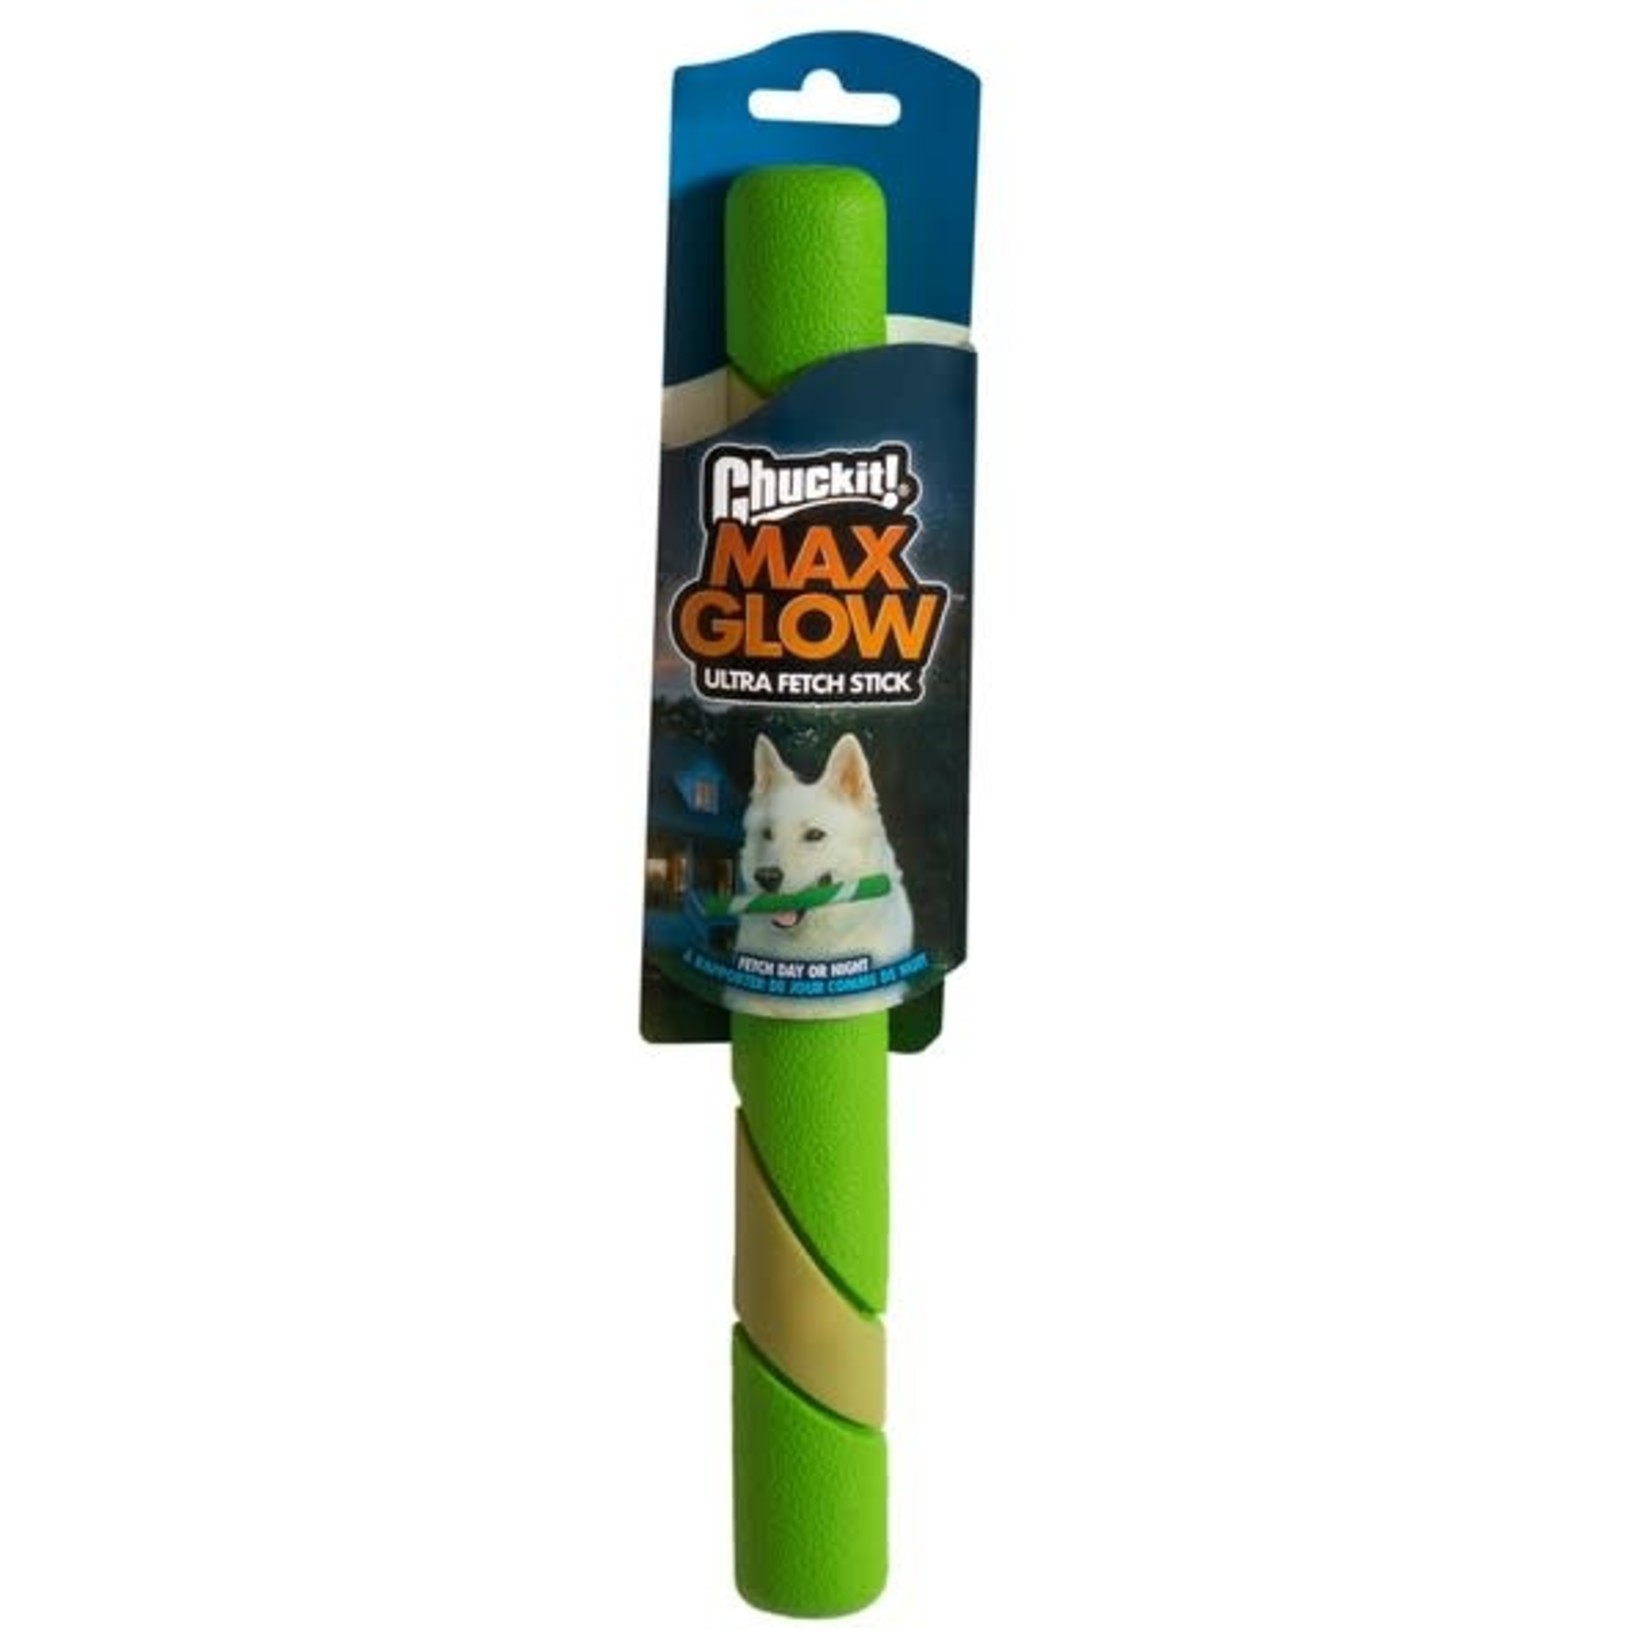 Chuckit! Max Glow Ultra Fetch Stick Dog Toy, 28cm